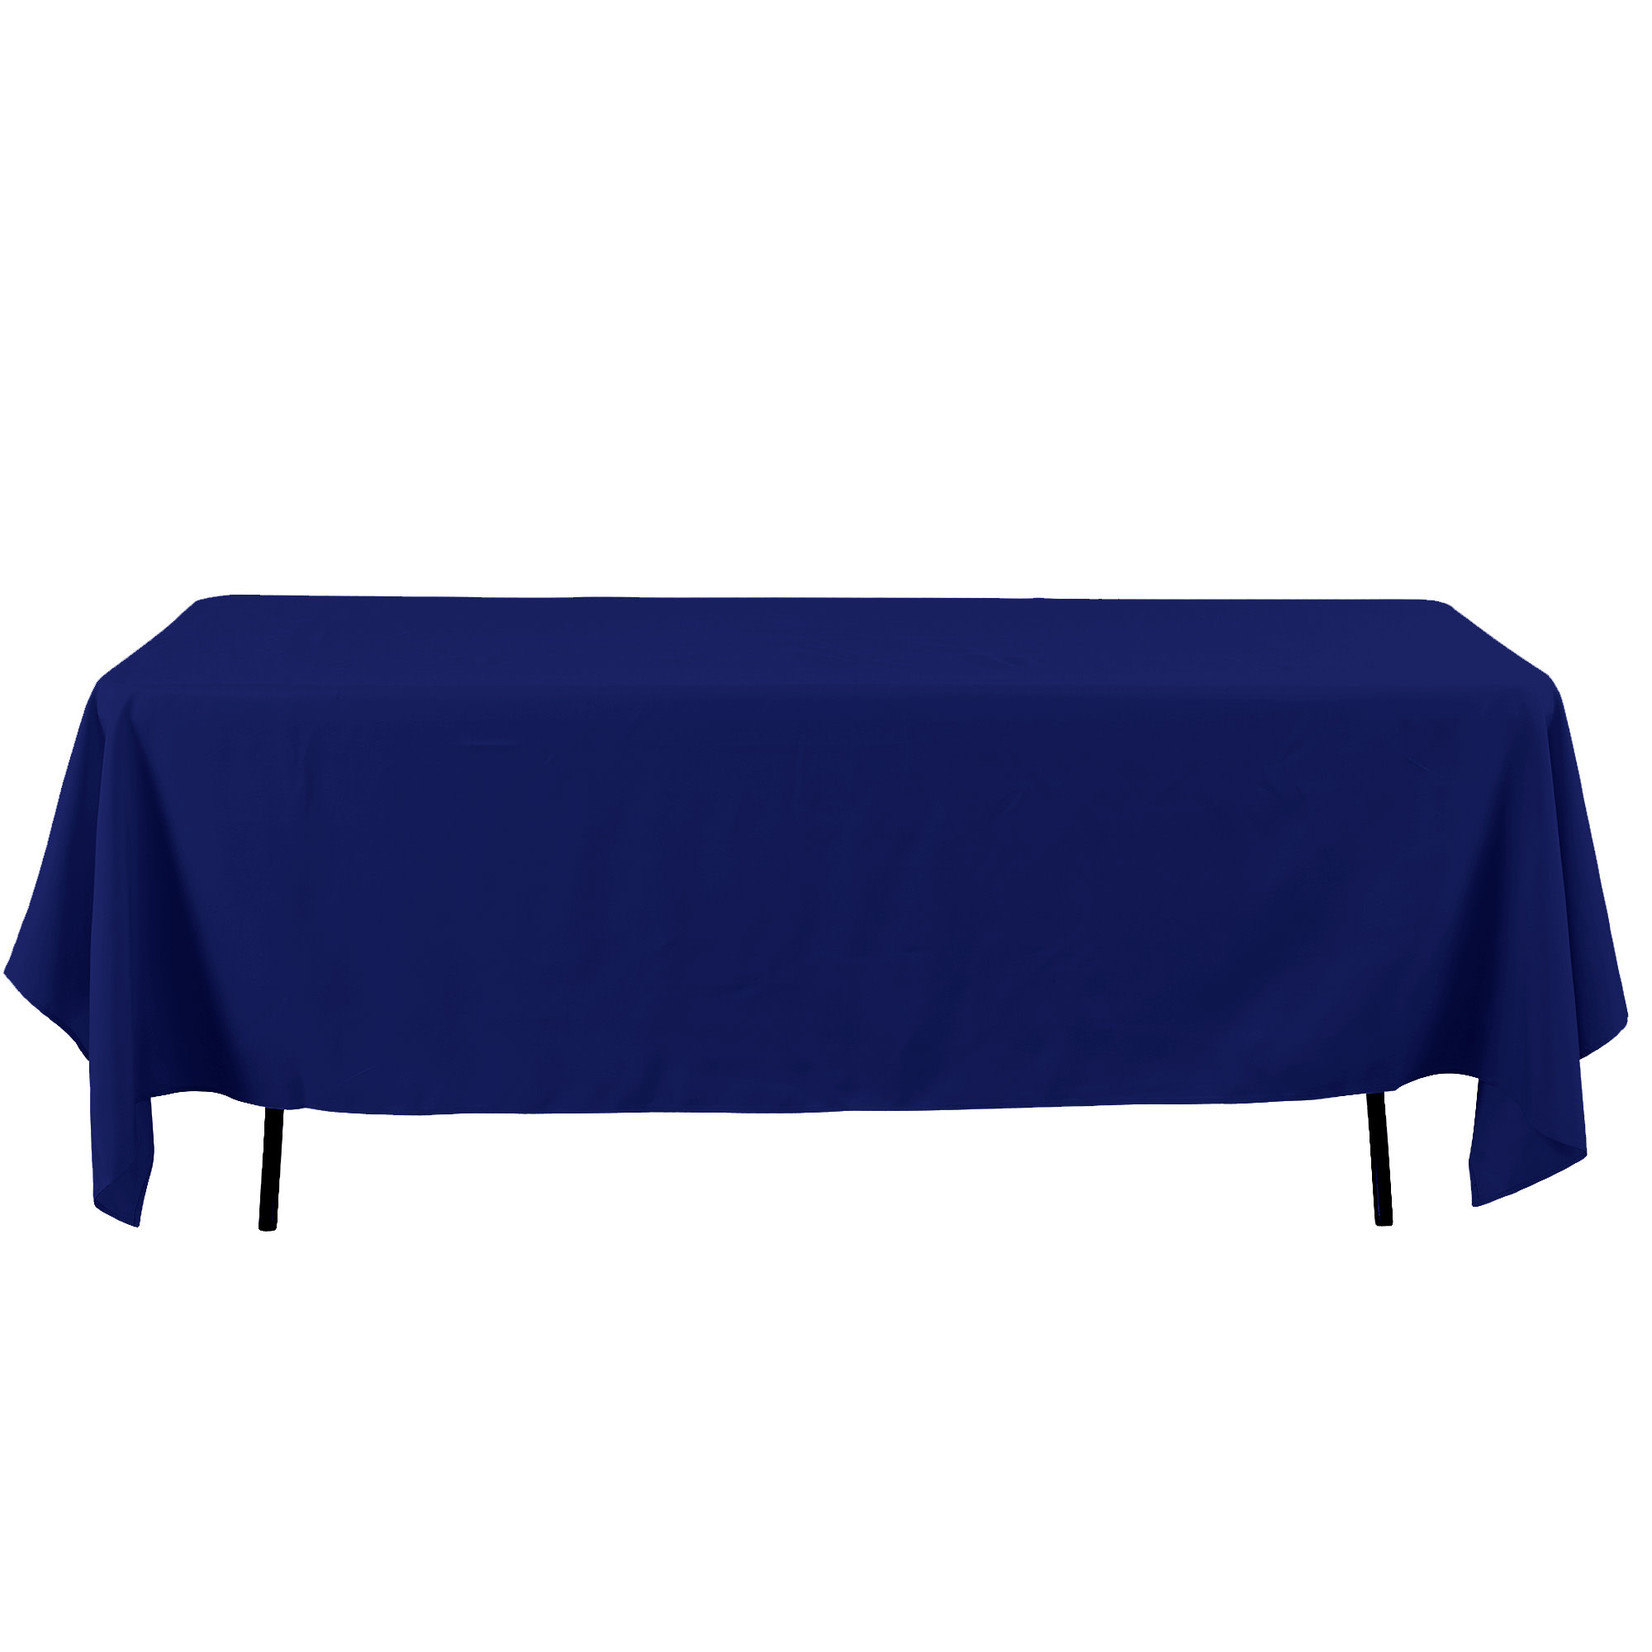 60 X 126’’ ROYAL BLUE RECTANGULAR TABLE COVER    C